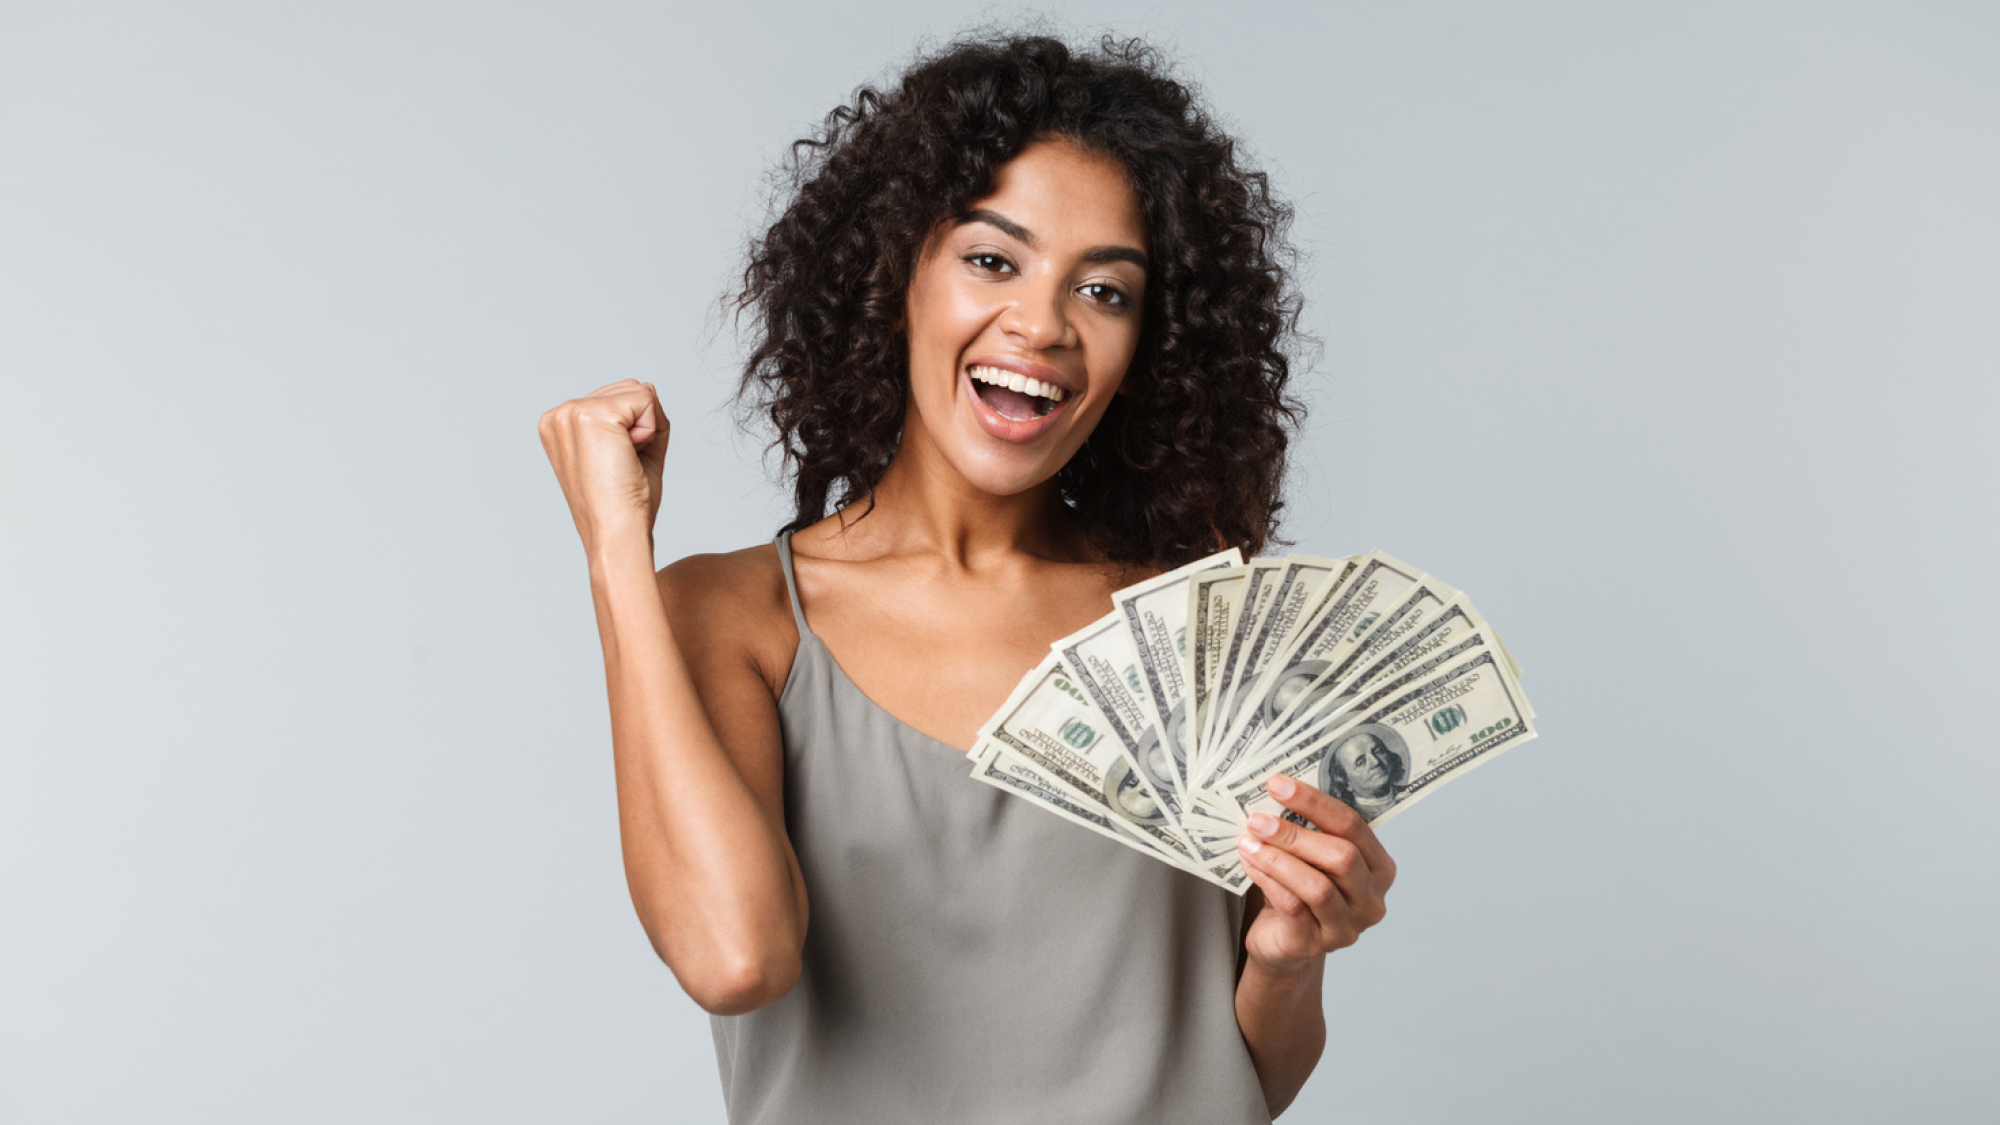 woman holding cash - market research reward